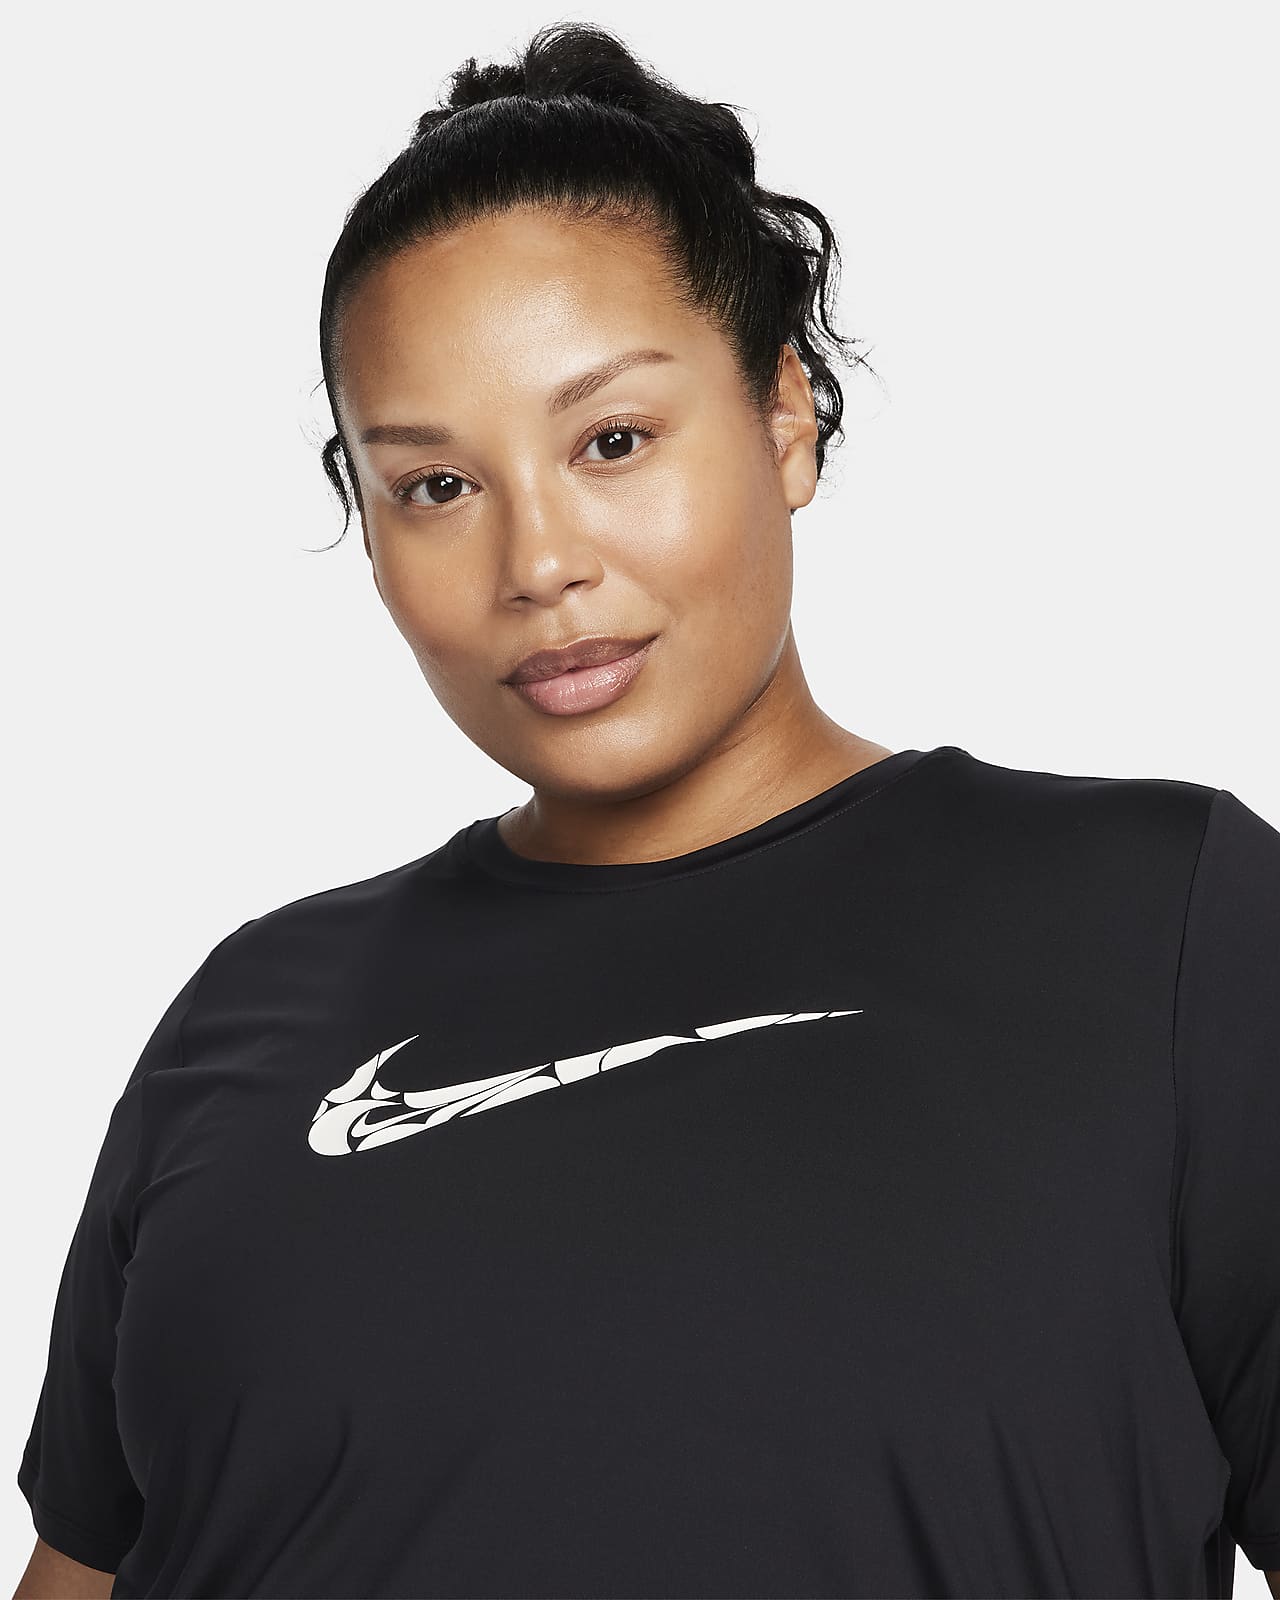 Nike Yoga Dri-FIT Women's Top (Plus Size). Nike IL